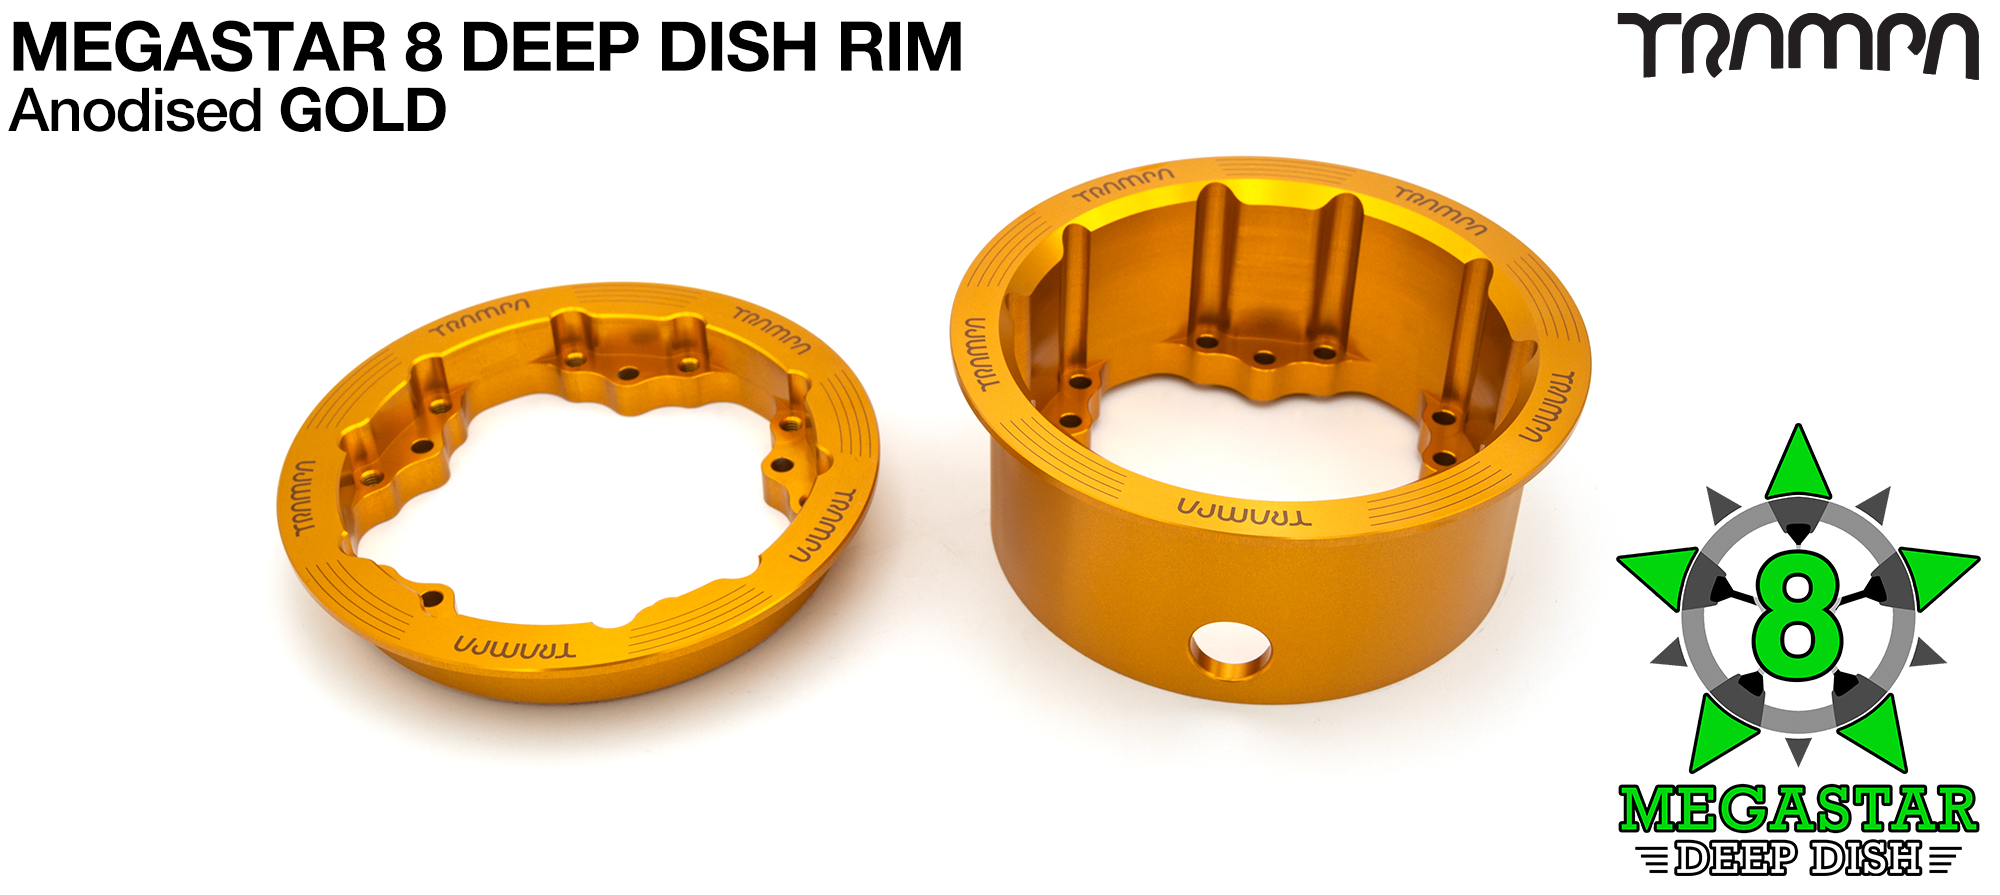 3.75x 2.5 Inch DEEP-DISH MEGASTAR Rims - GOLD 